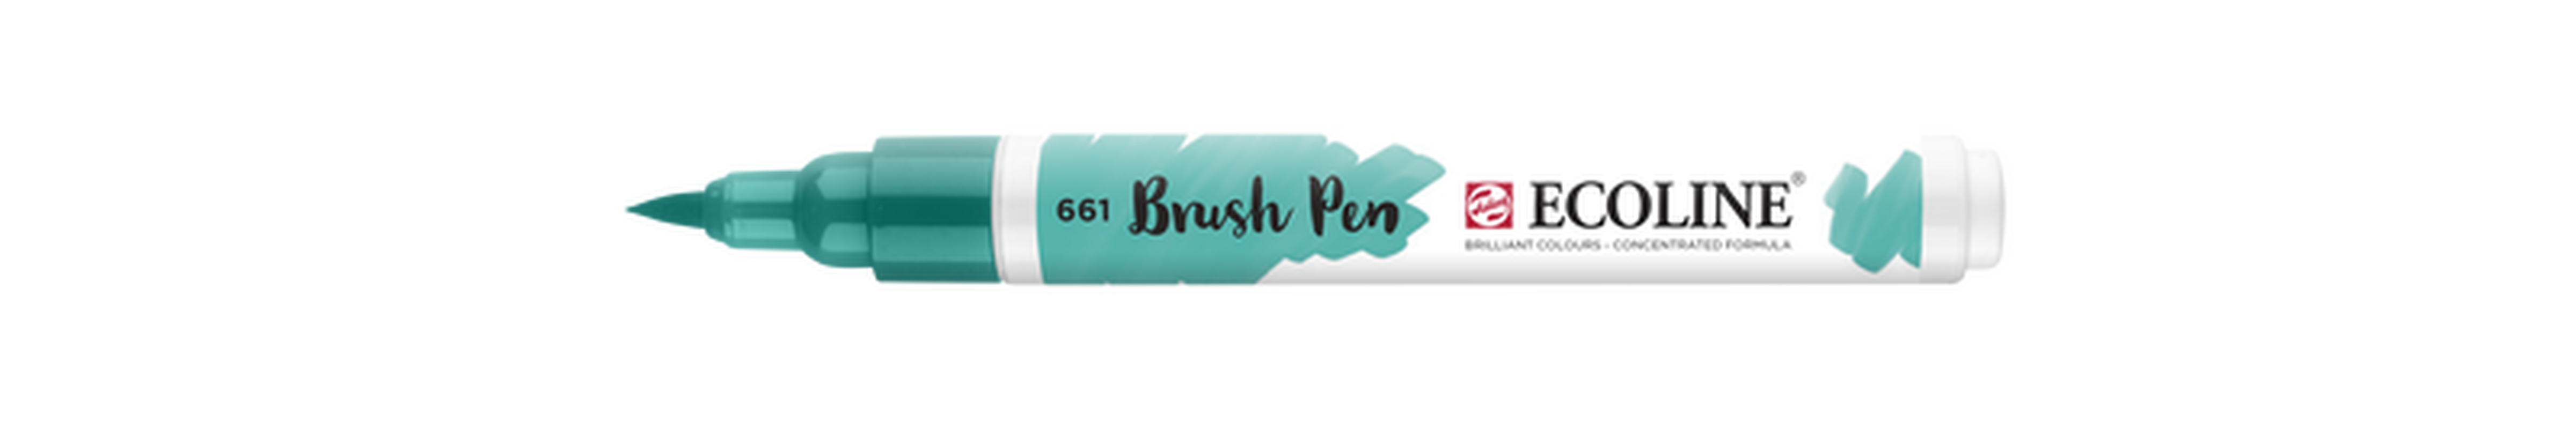 Rotulador Ecoline Brush Pen Verde Turquesa 661 - Droguería Isabel